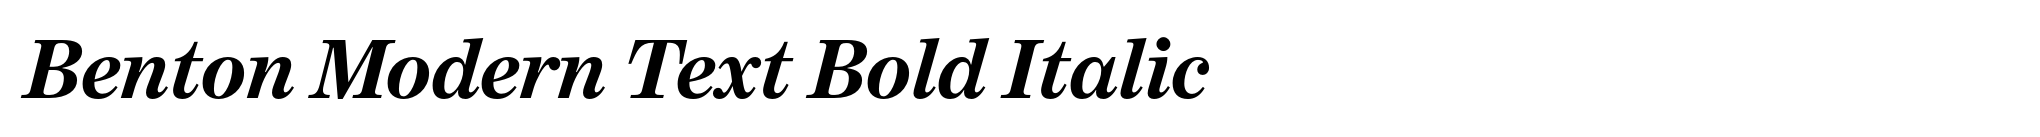 Benton Modern Text Bold Italic image